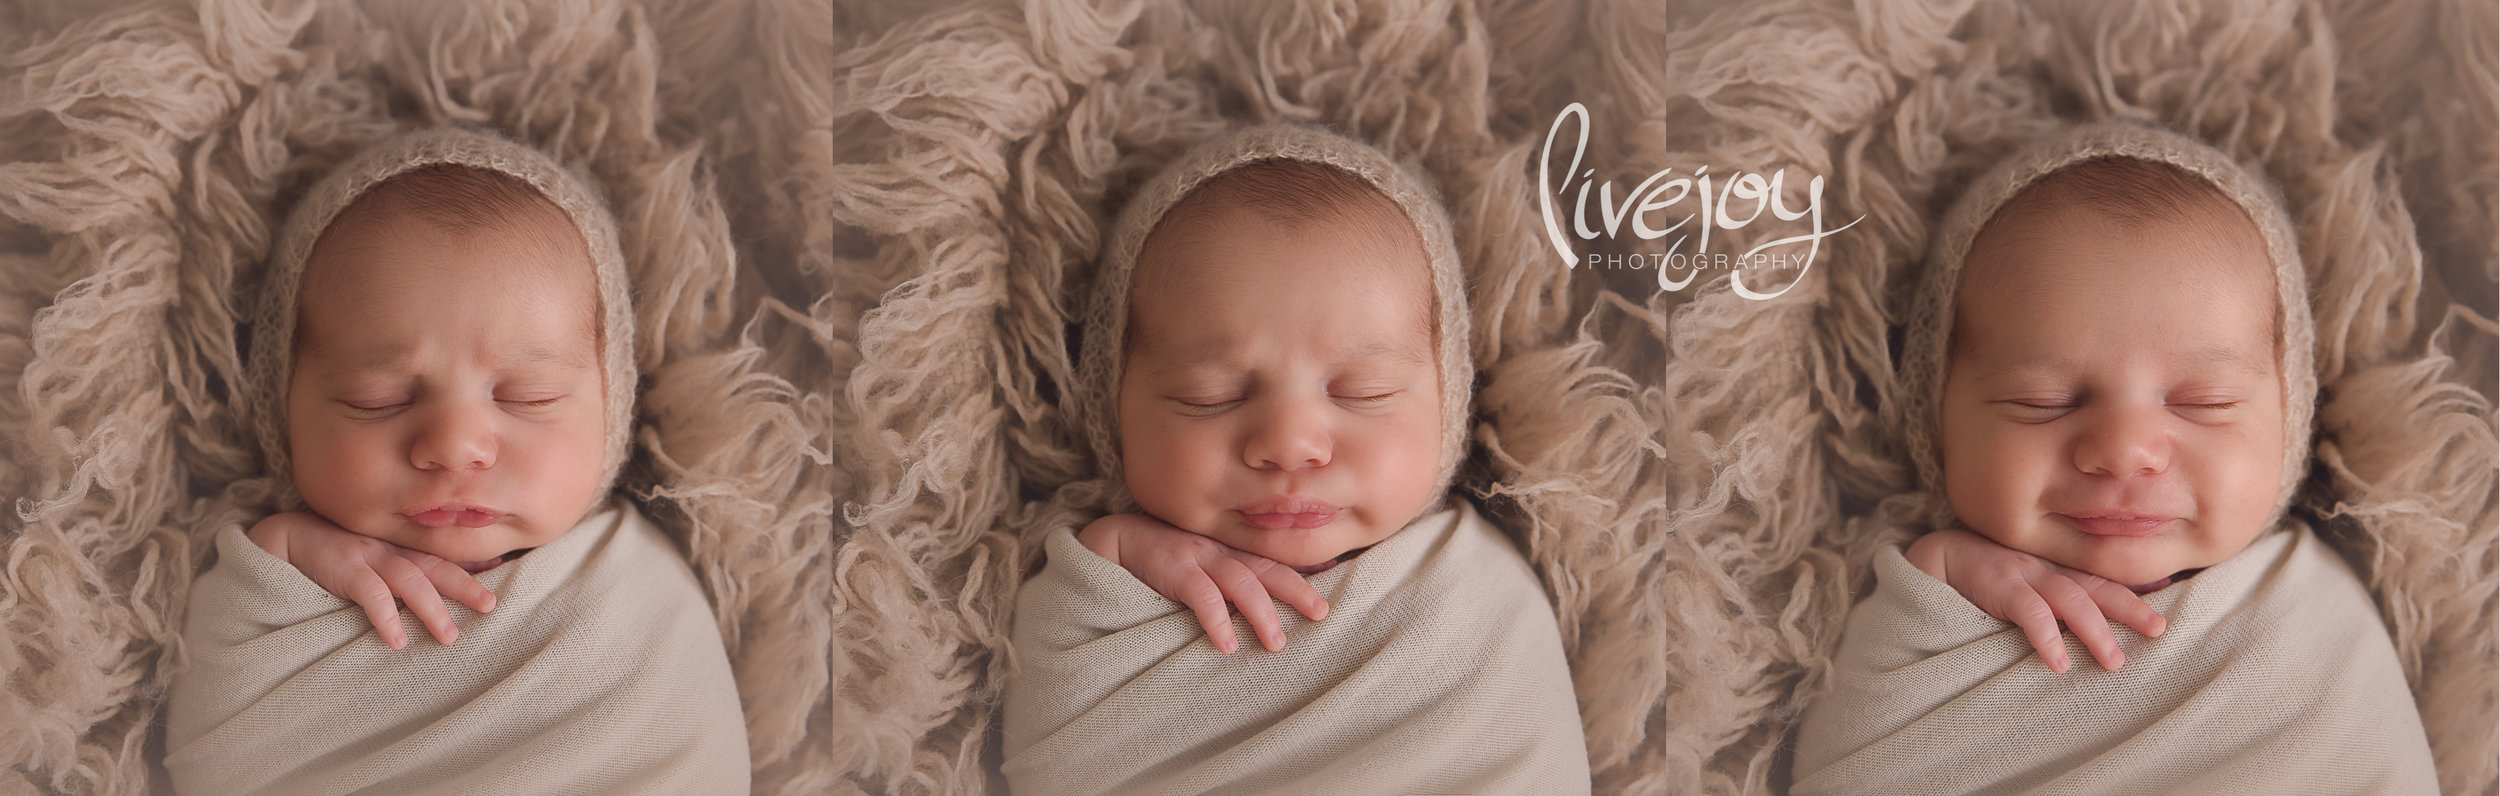 Newborn Photography | Oregon | LiveJoy Photography